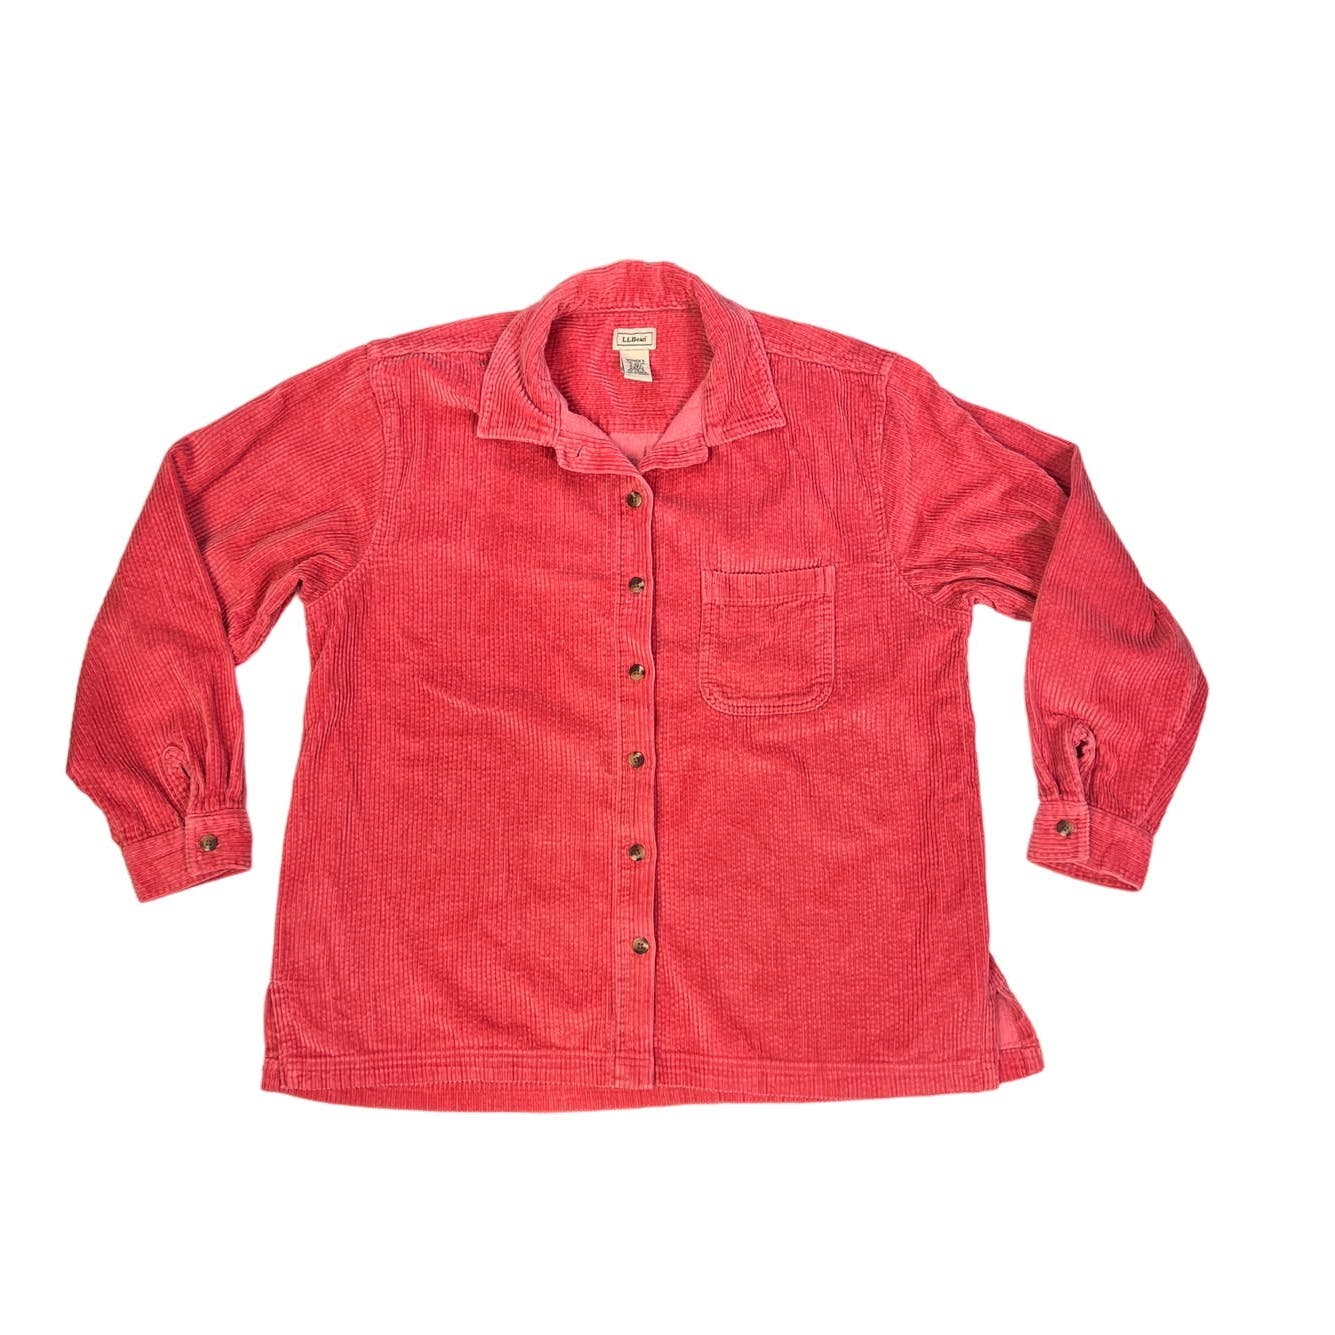 LL Bean Wide Whale Corduroy Shirt Jacket Women’s Large Pink Button Up Cotton